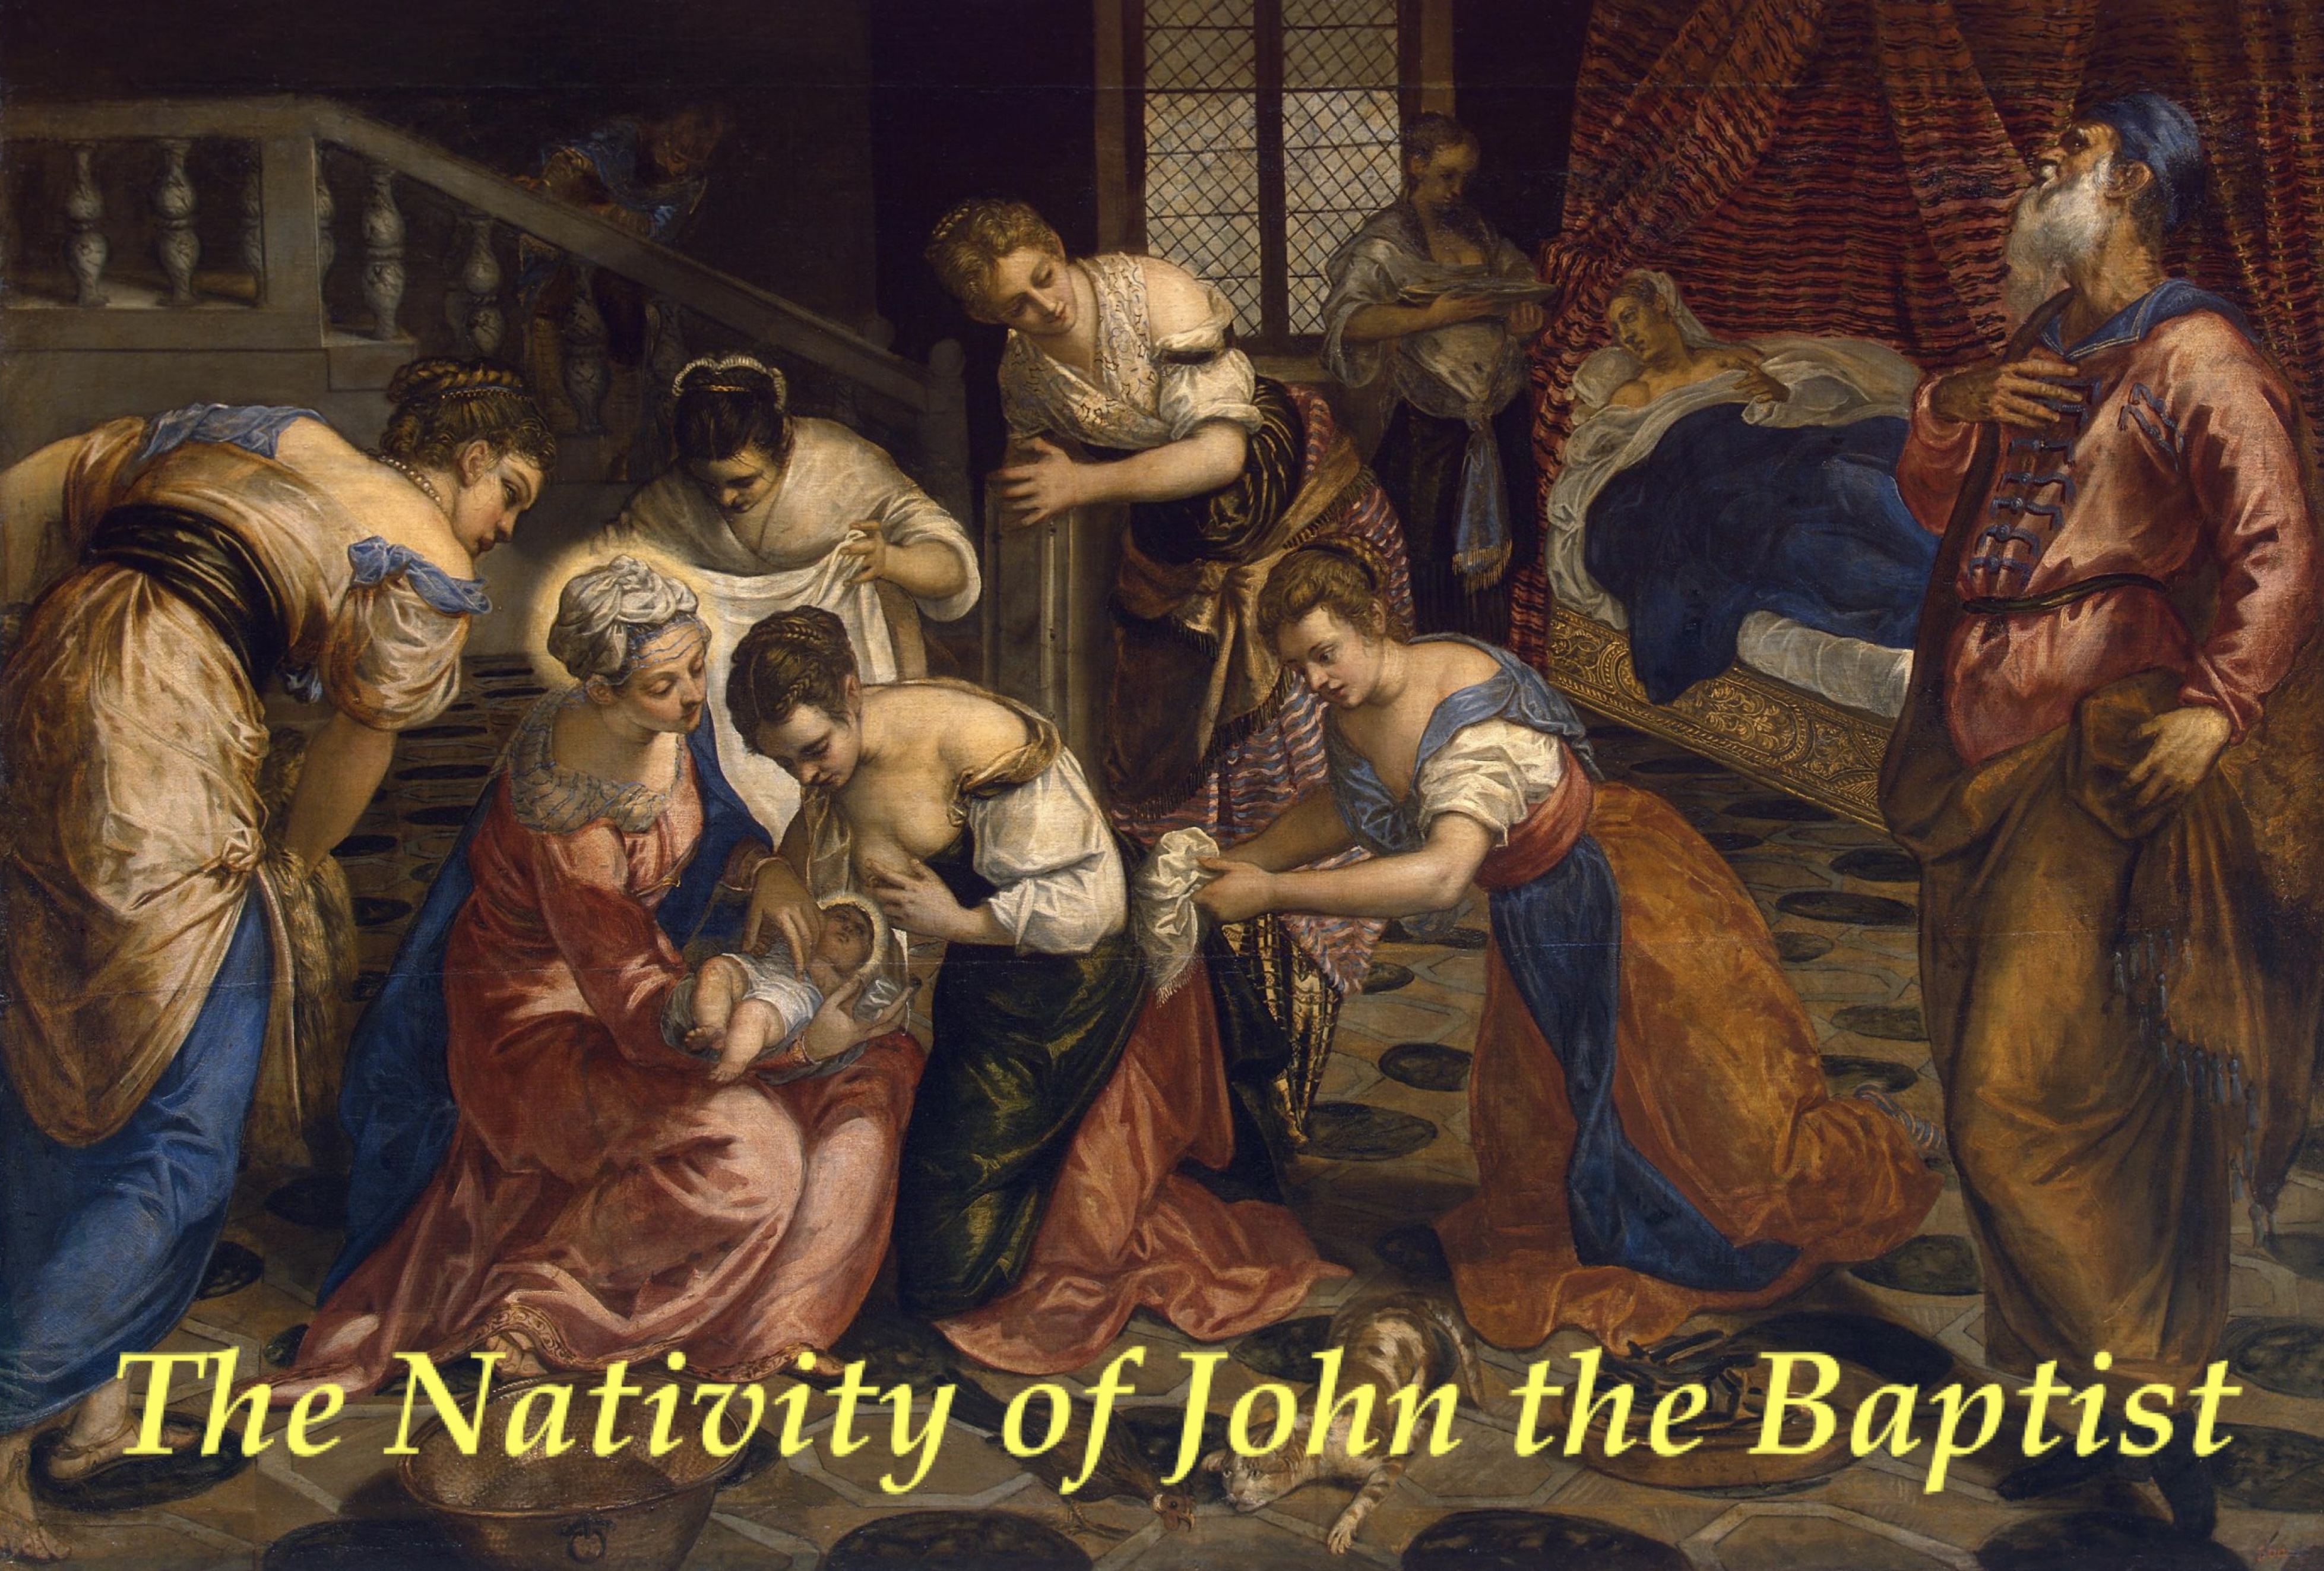 24th June – The Nativity of John the Baptist